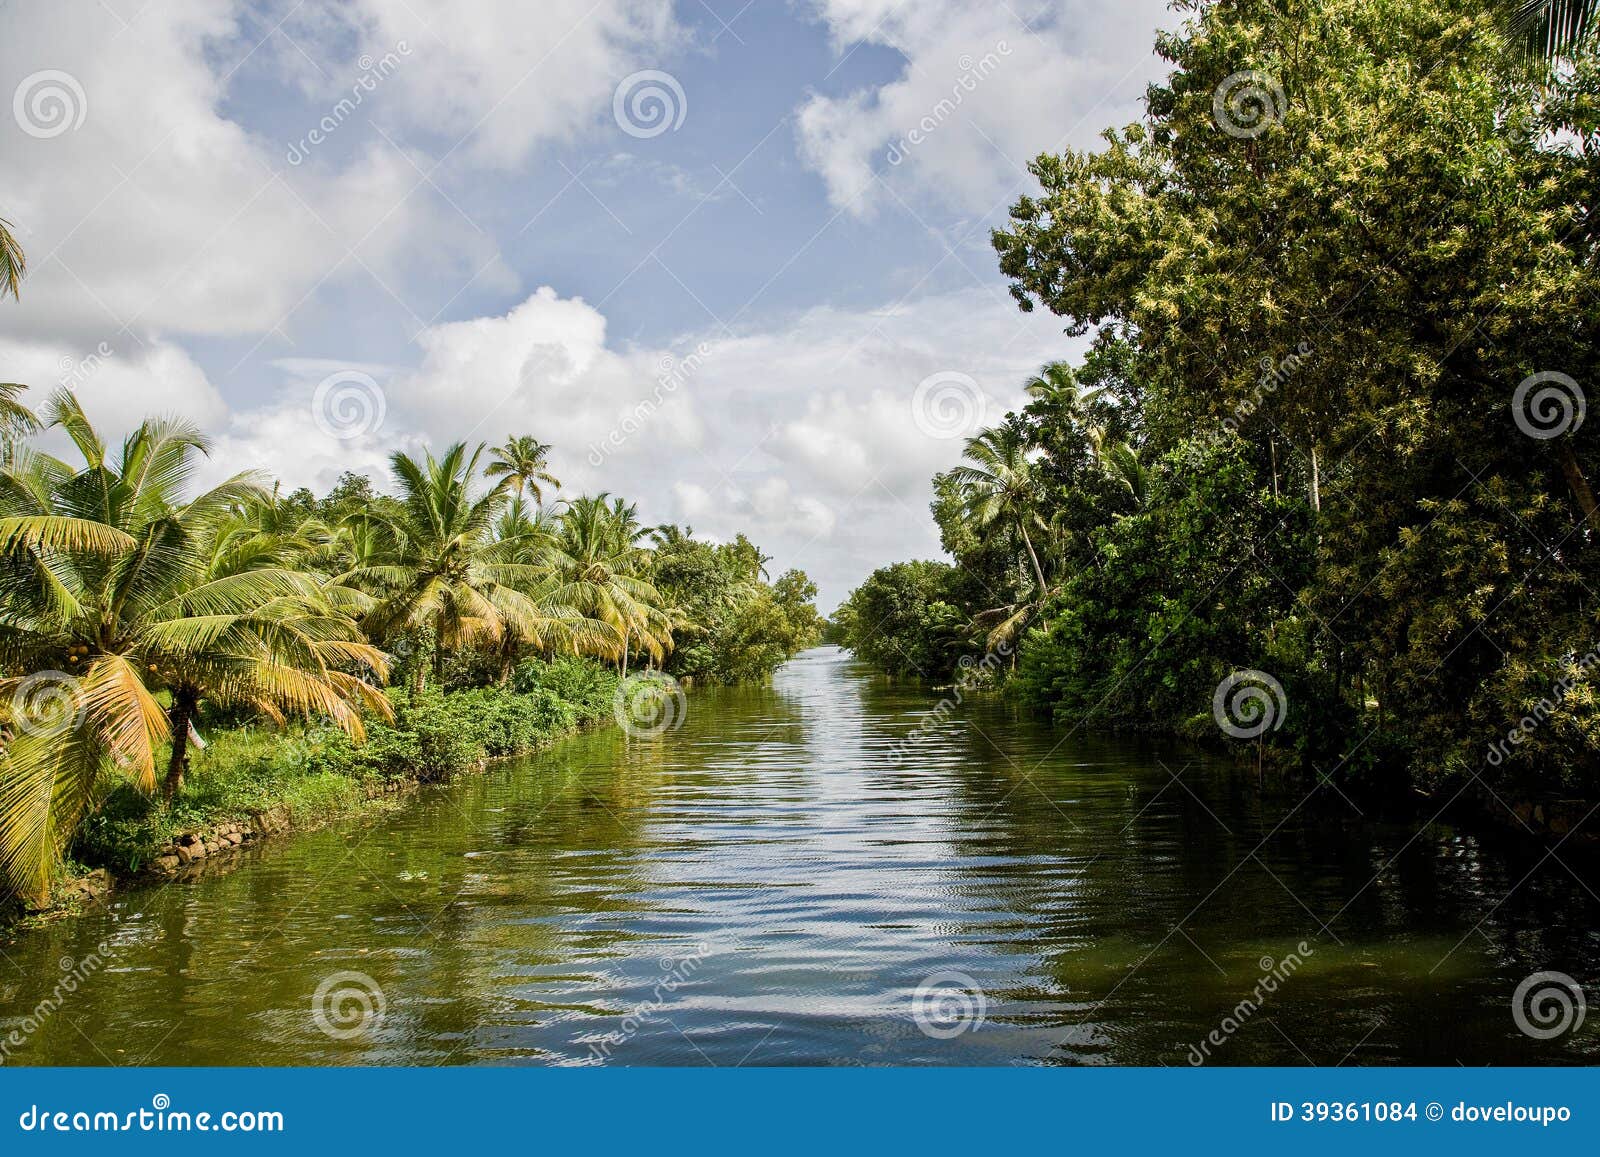 kerala waterway